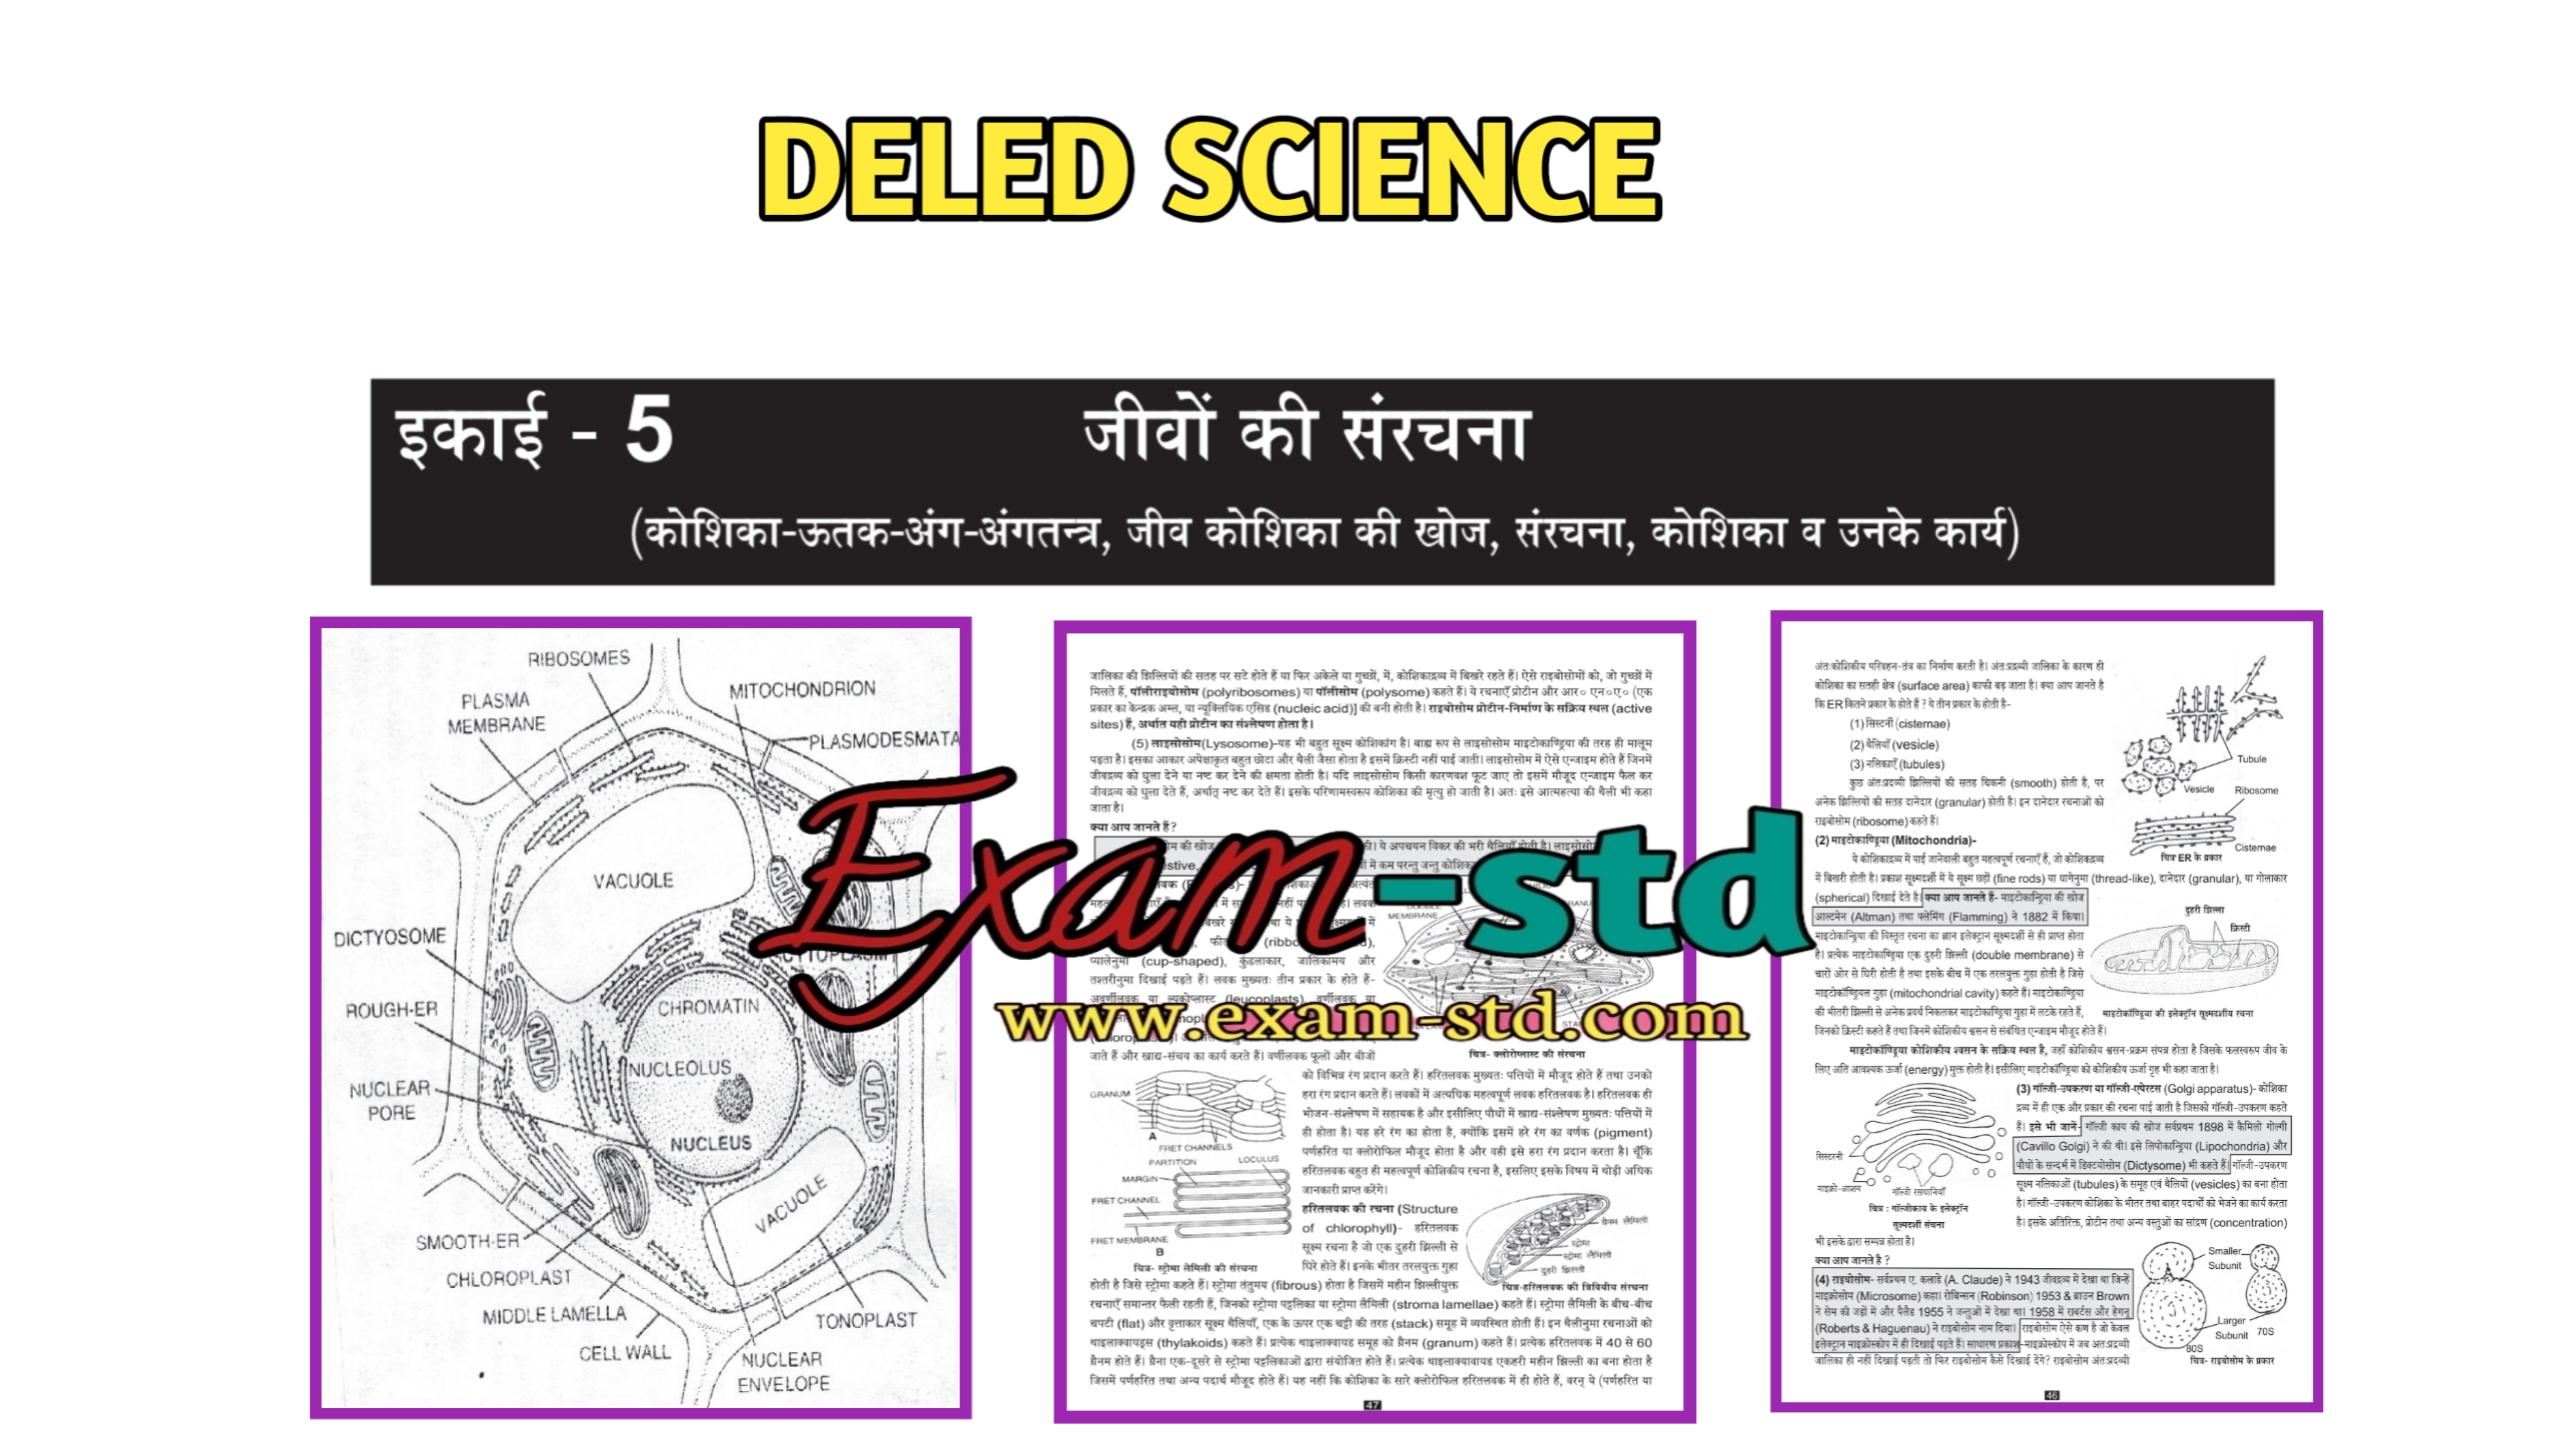 Deled science notes in hindi, jiwo ki sanrachana, exam-std